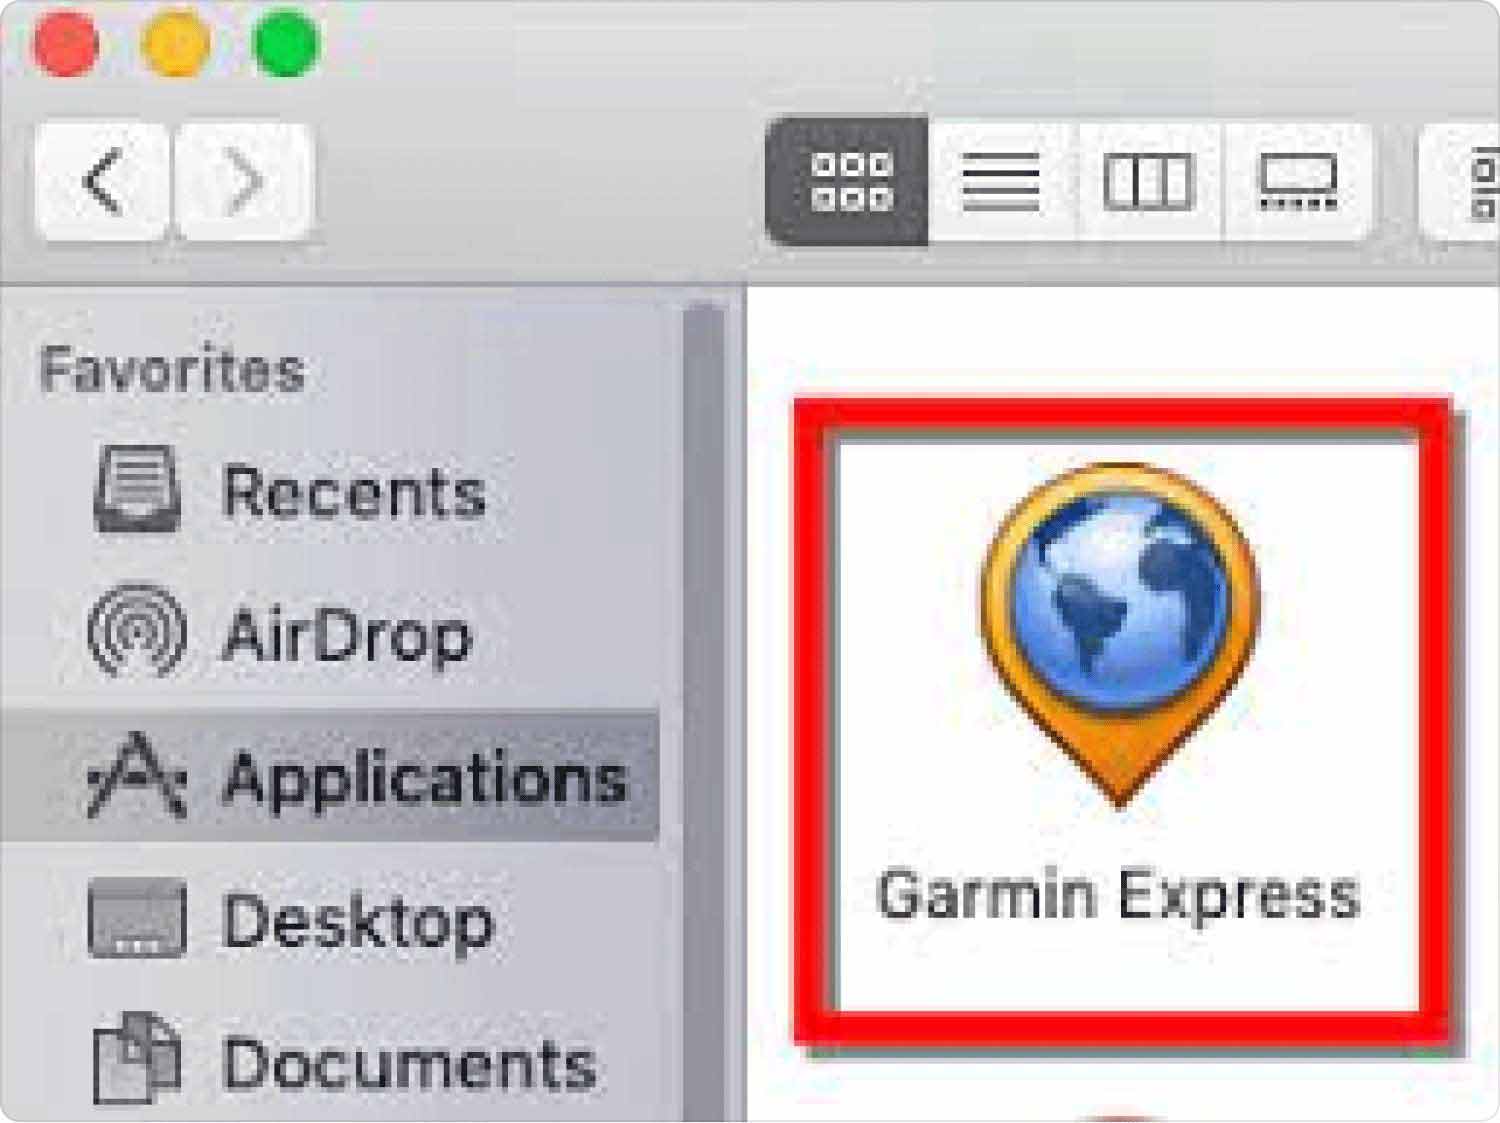 Uninstall Garmin Express Using the Manual Option